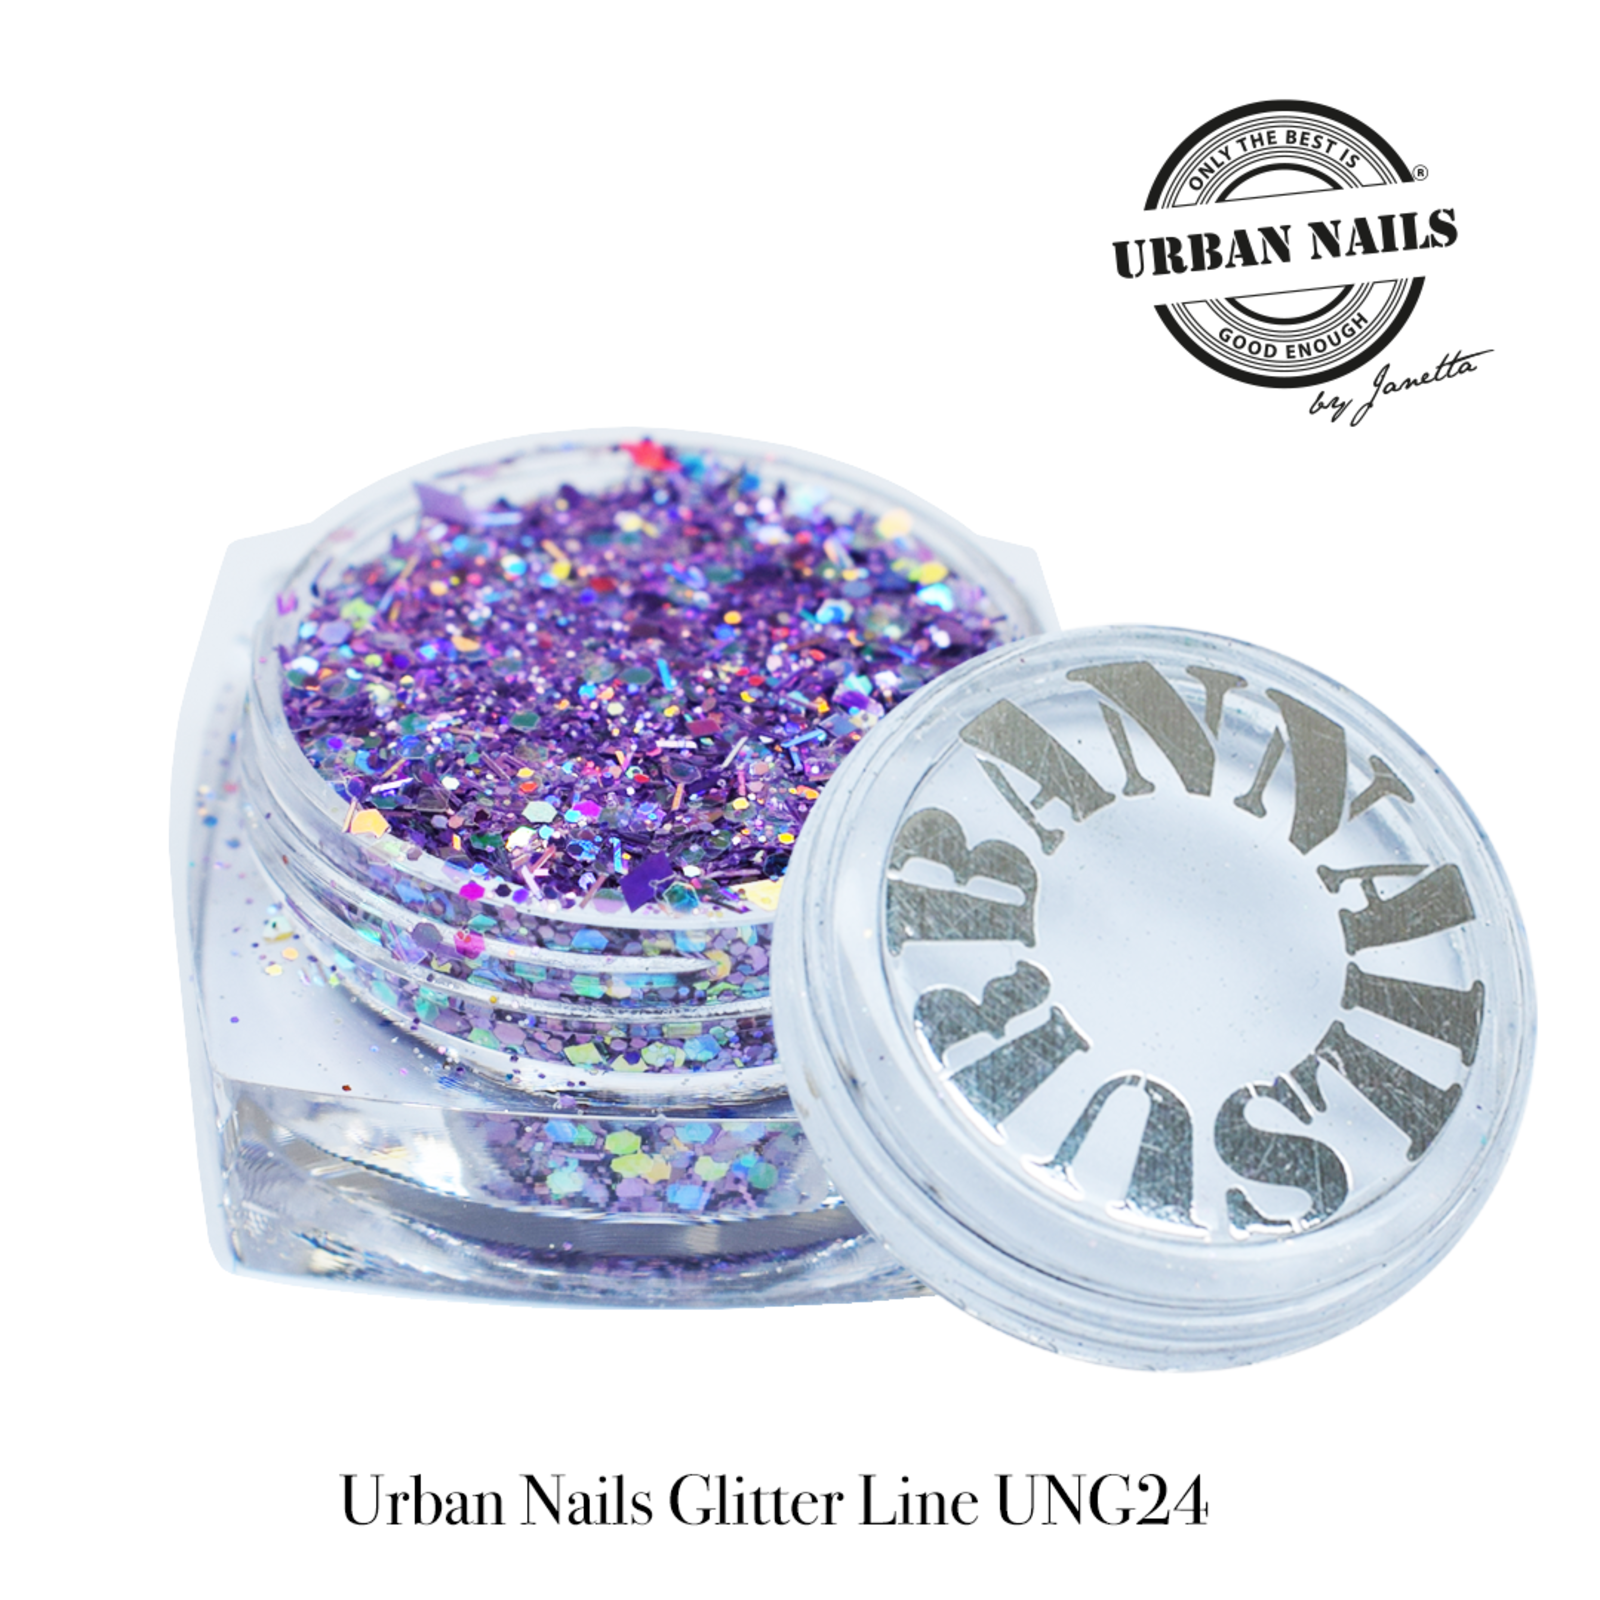 Urban nails Glitter Line UNG24